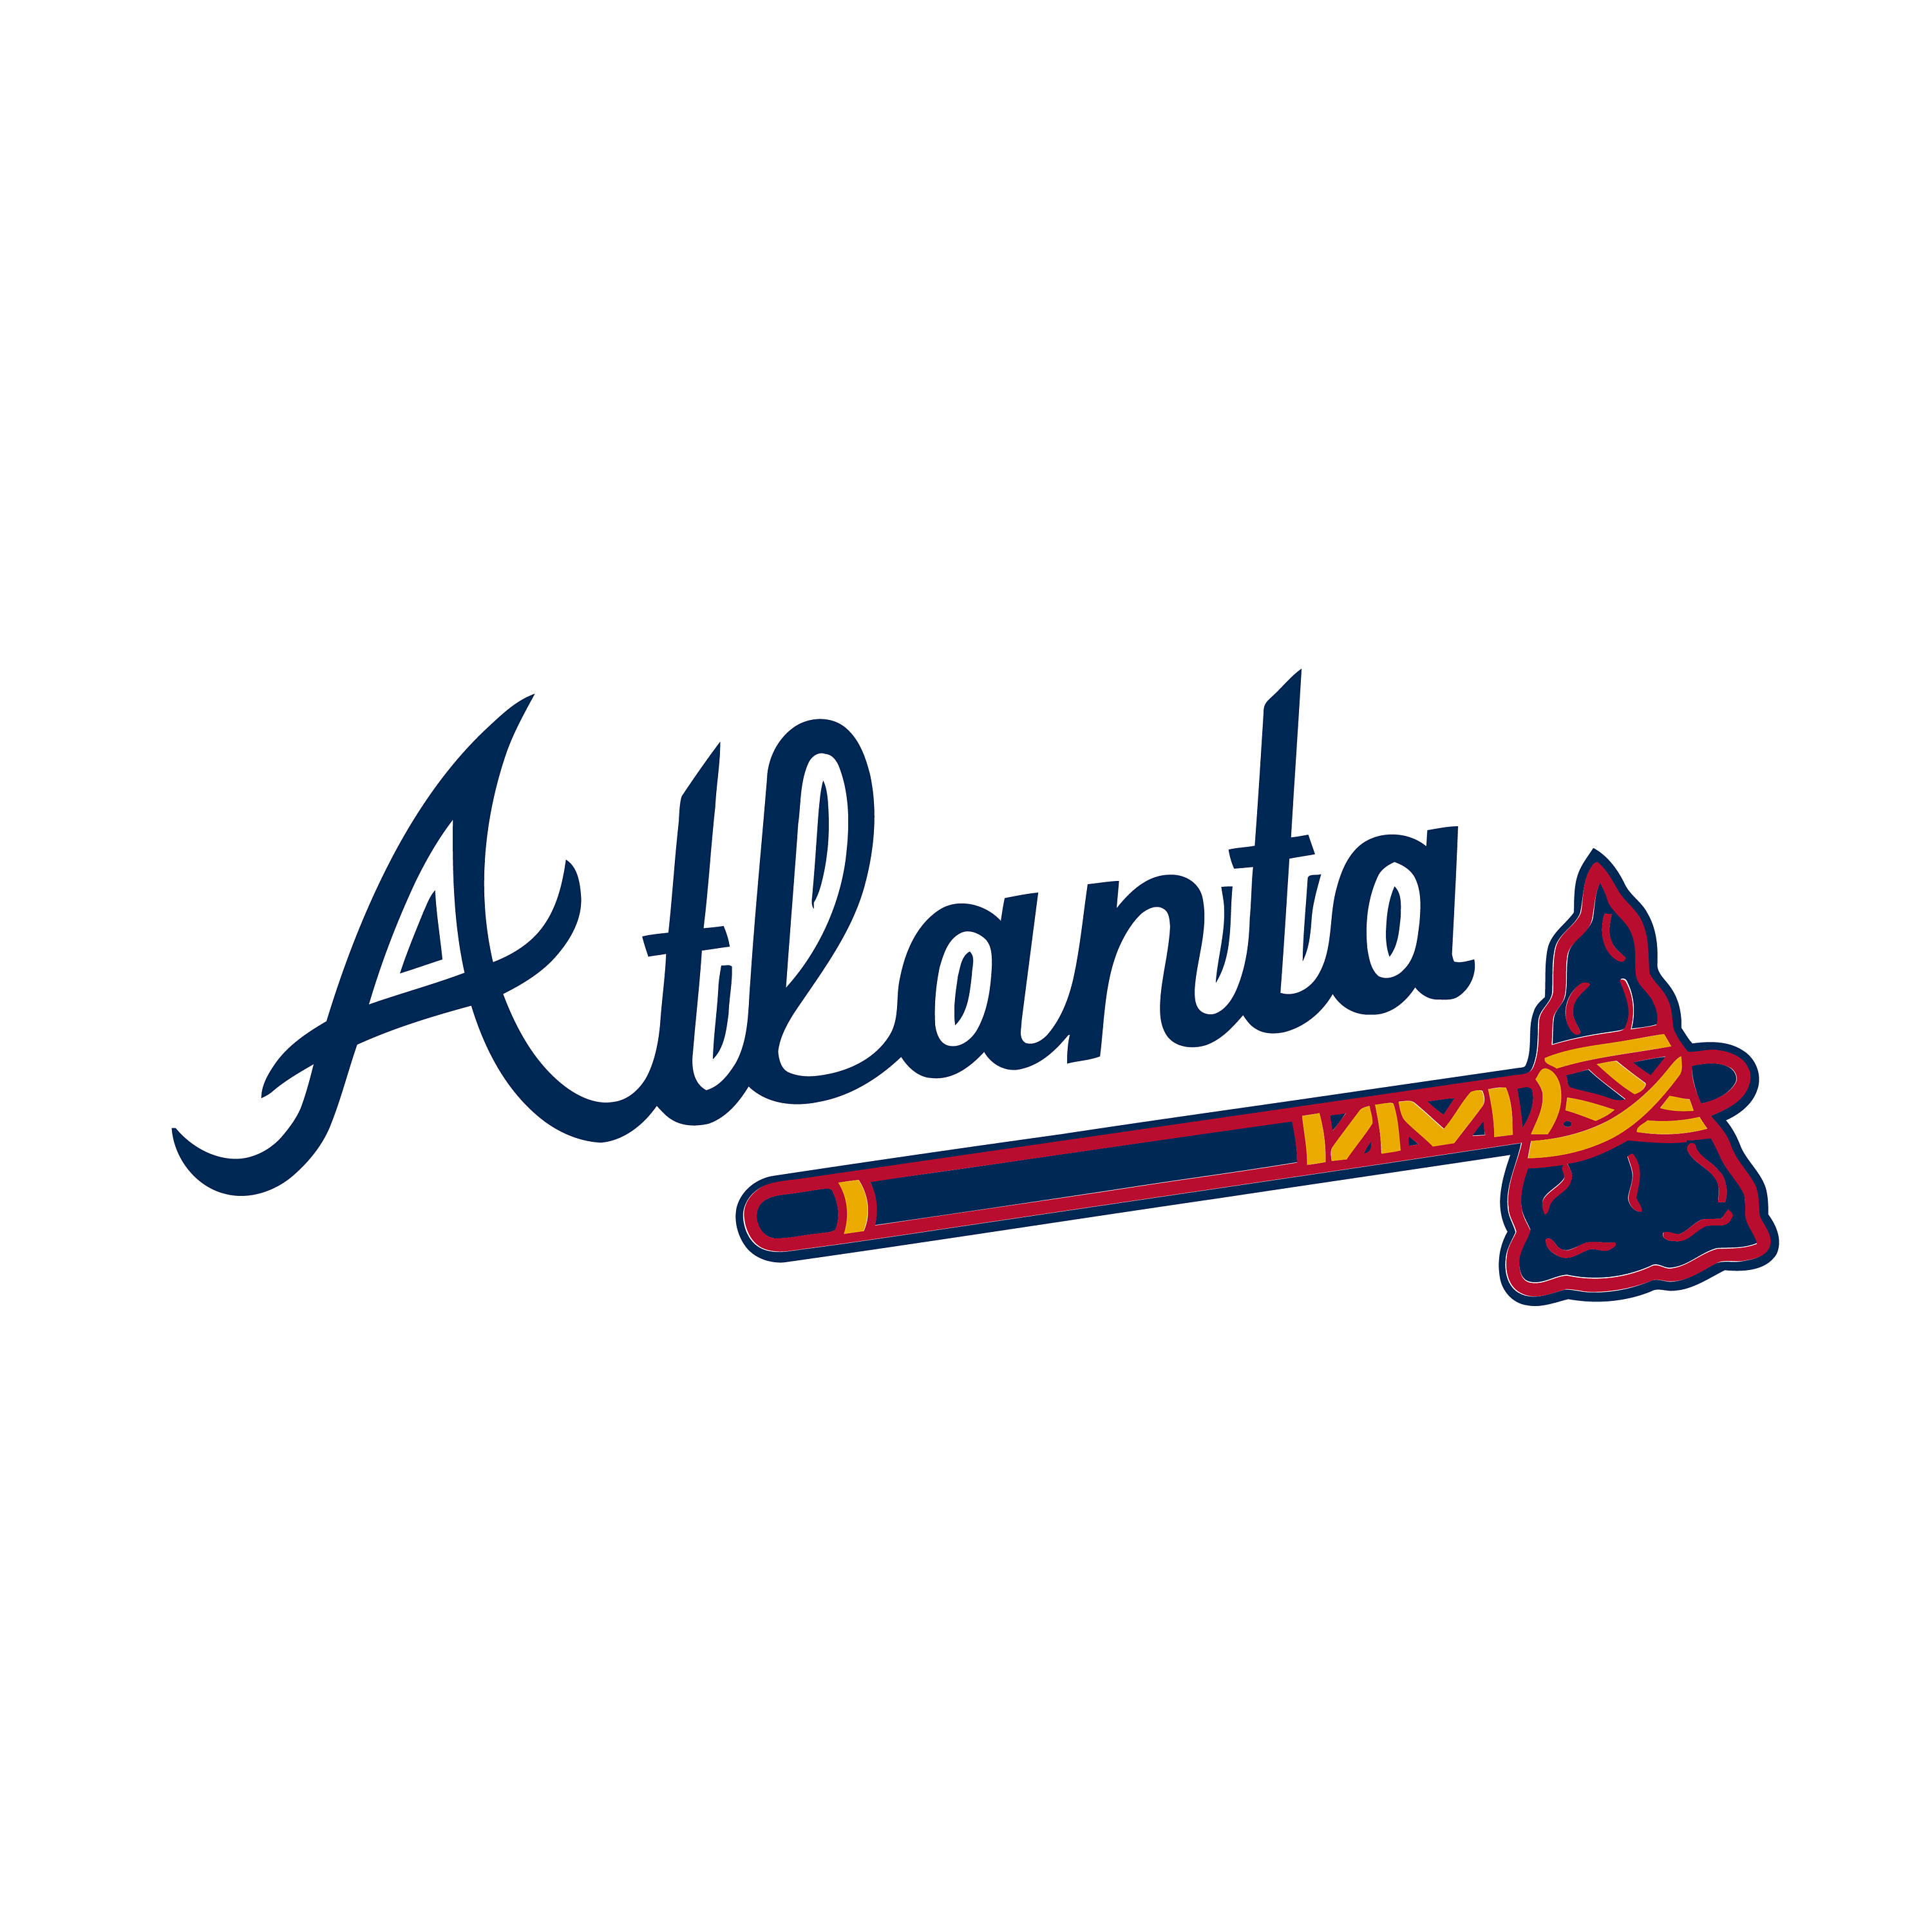 Atlanta Braves Logo Images Free Download On Clipartmag